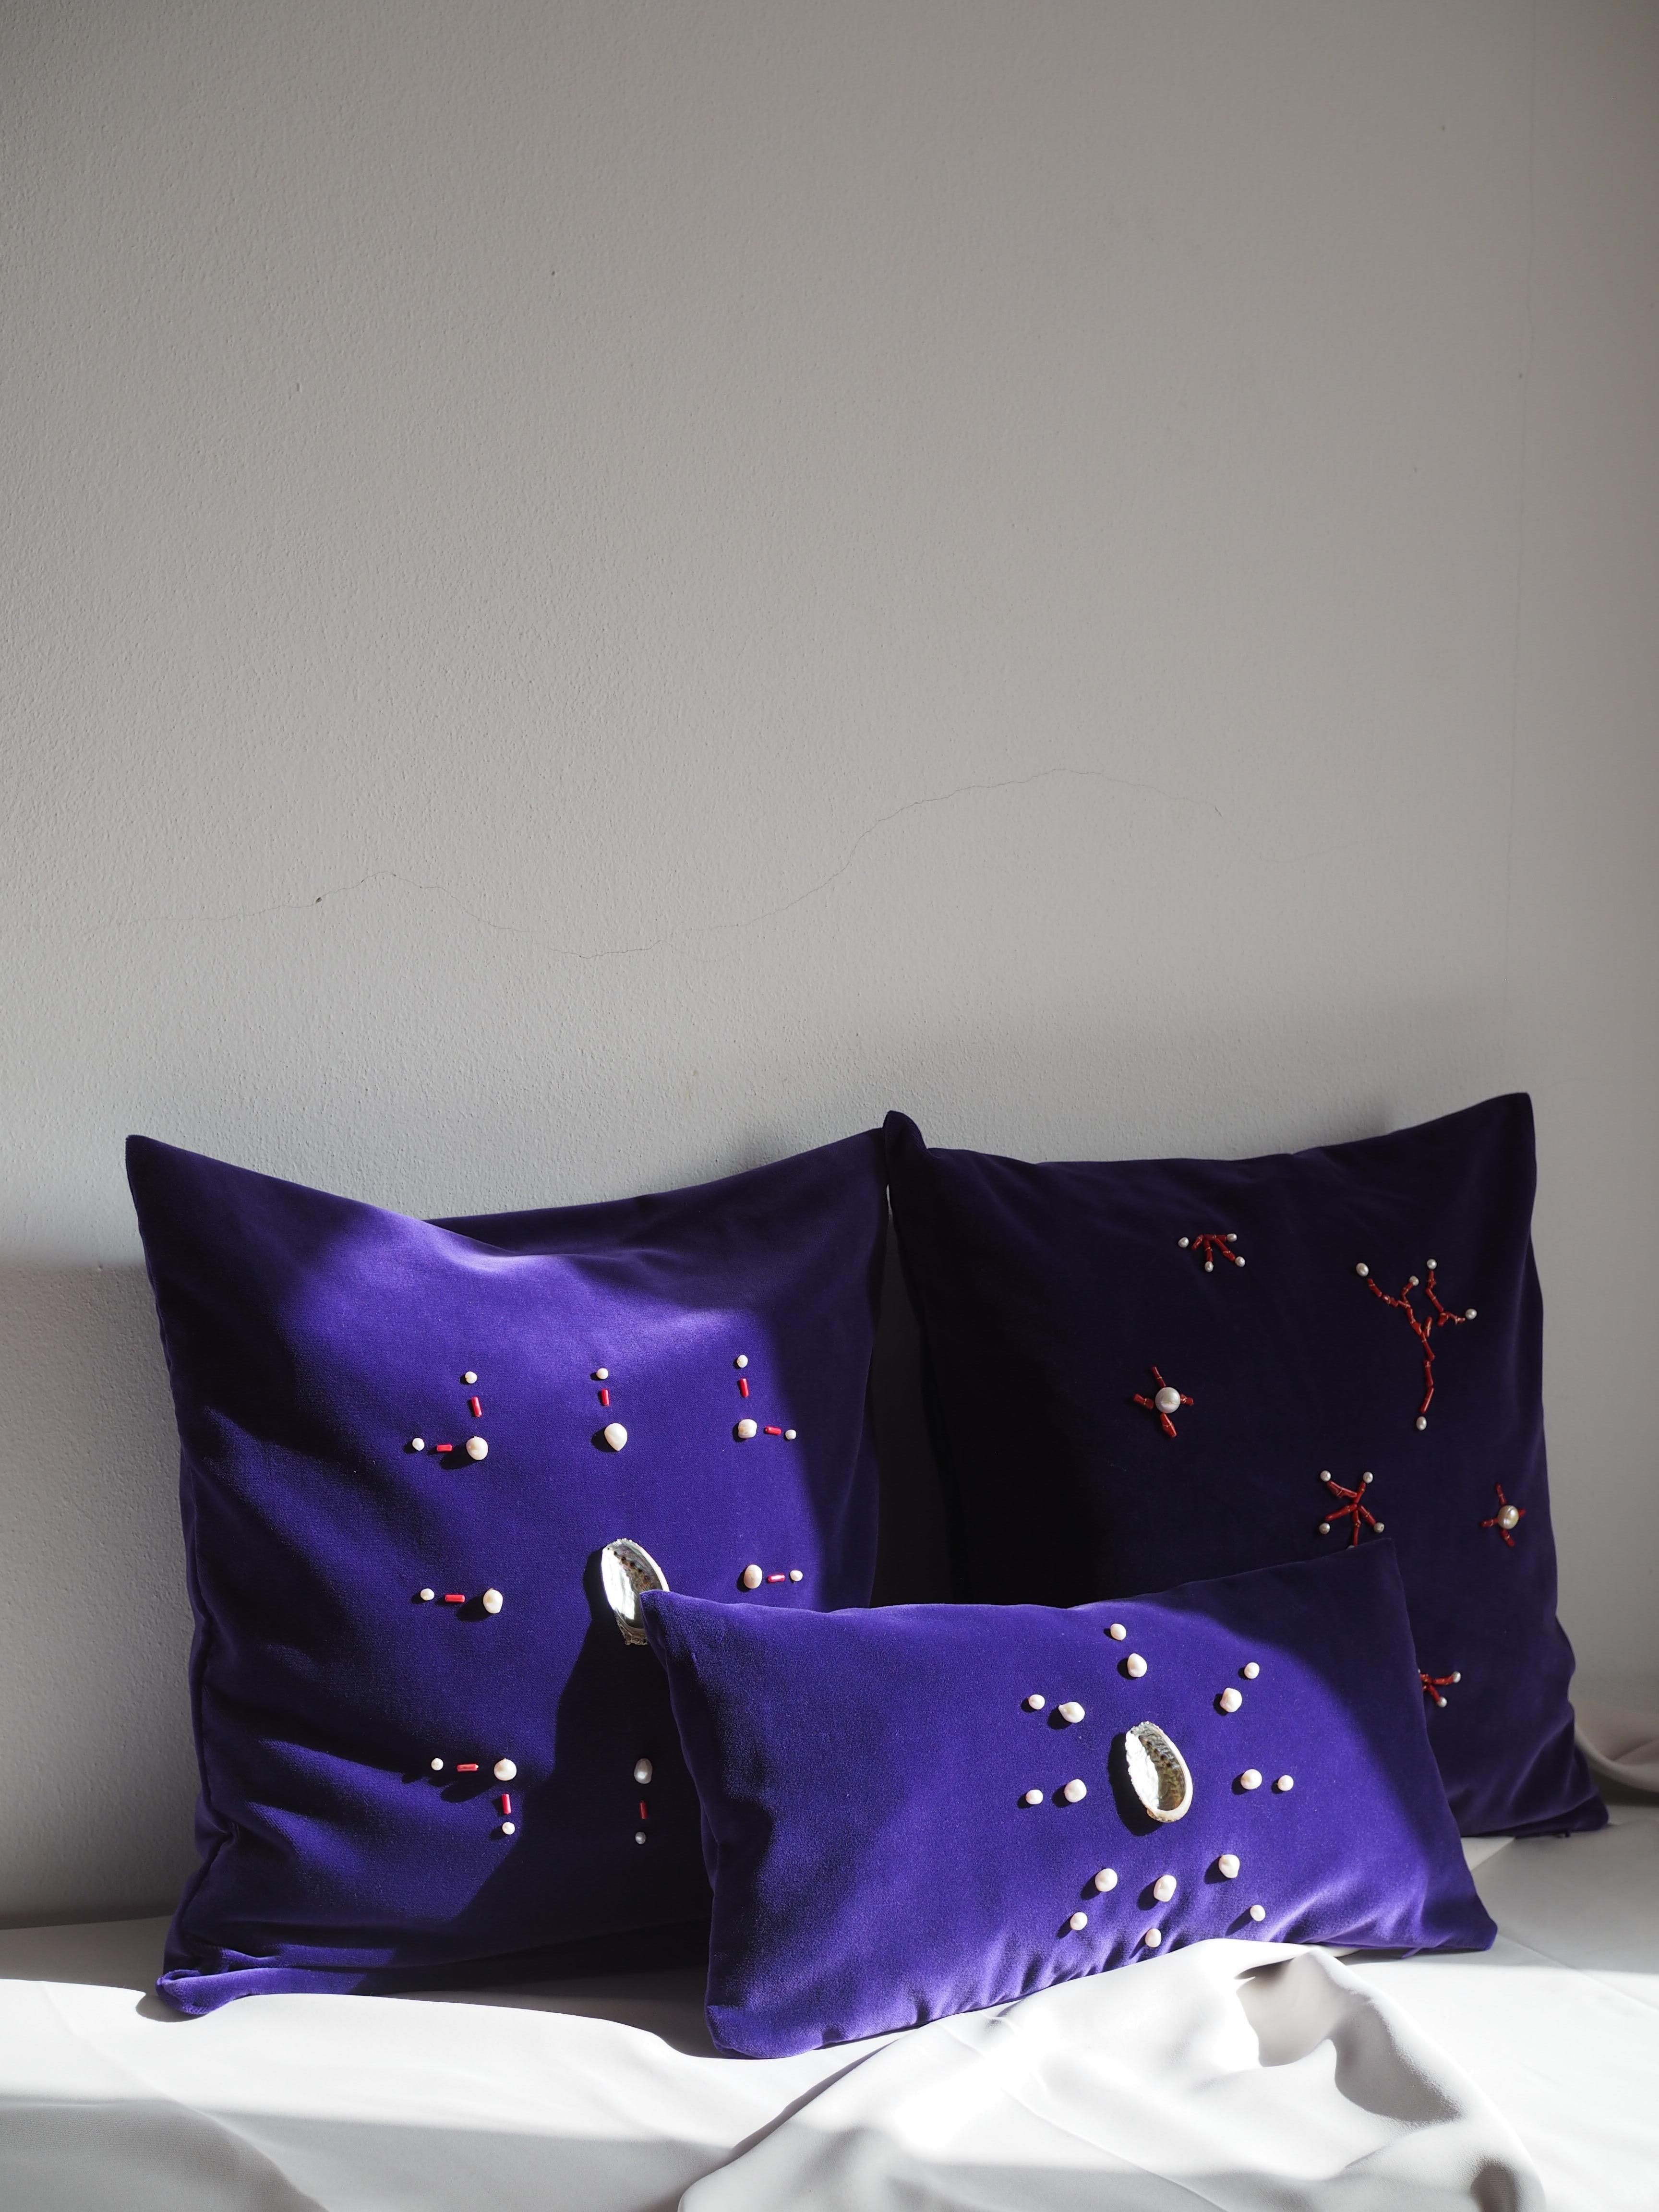 Embroidered Bon Appetit 008 Decorative Cushion Culto Ponsoda 21st century desingn For Sale